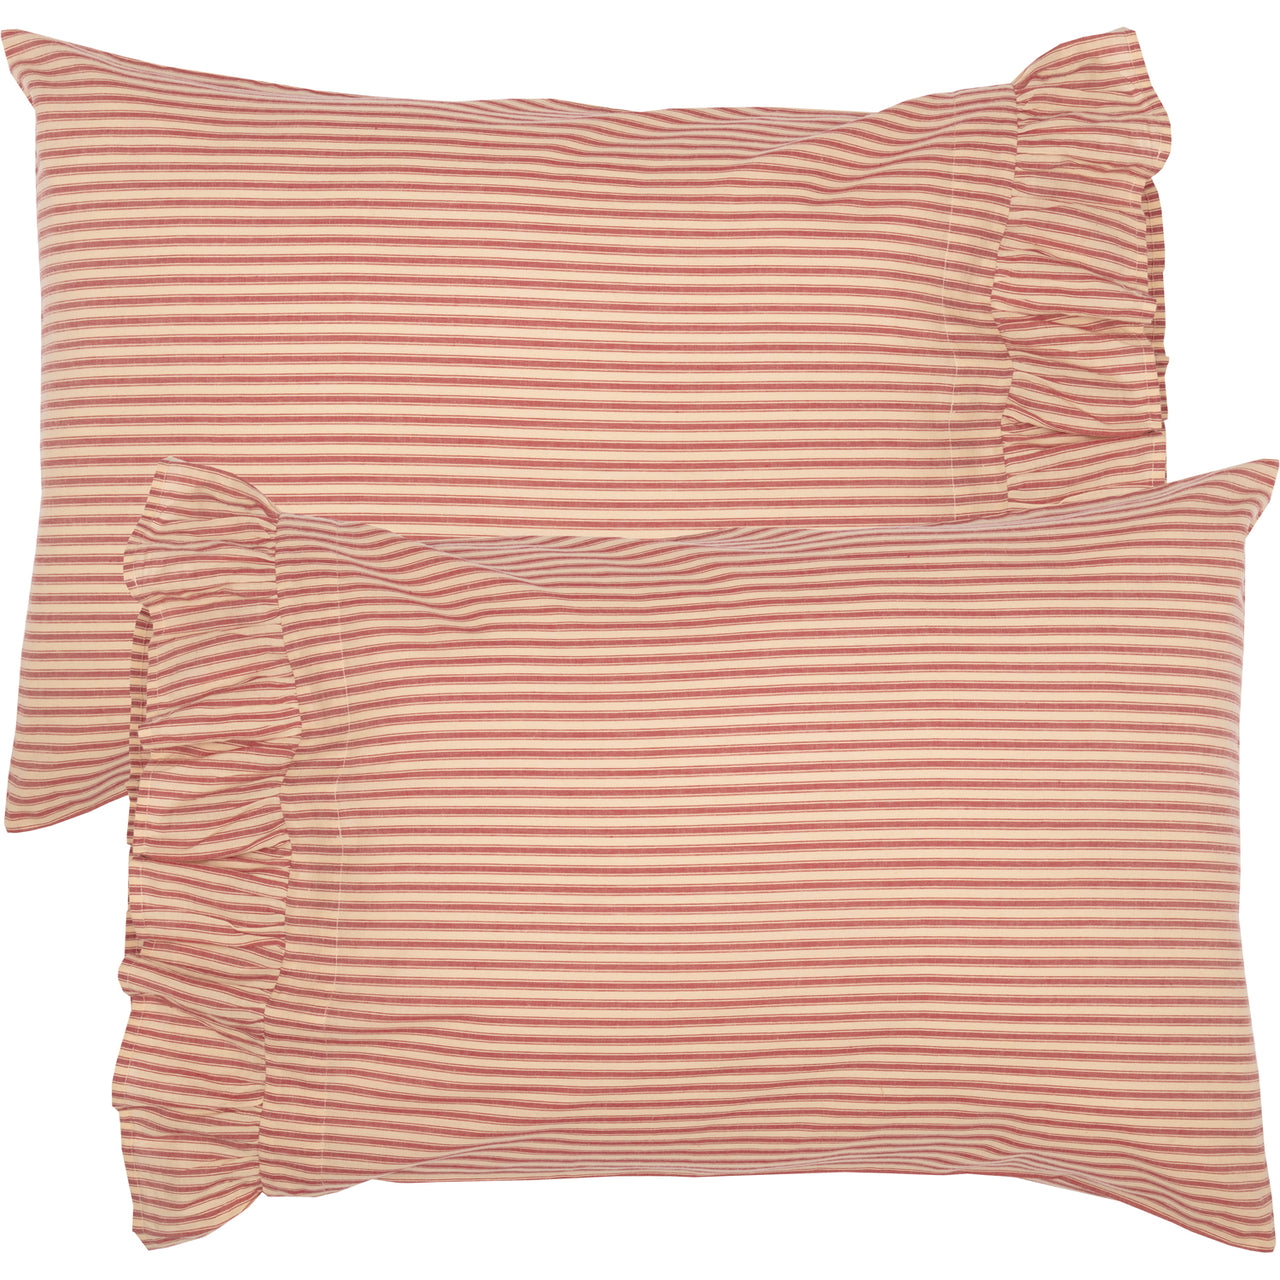 Sawyer Mill Red Ticking Stripe Standard Pillow Case Set of 2 21x30 VHC Brands